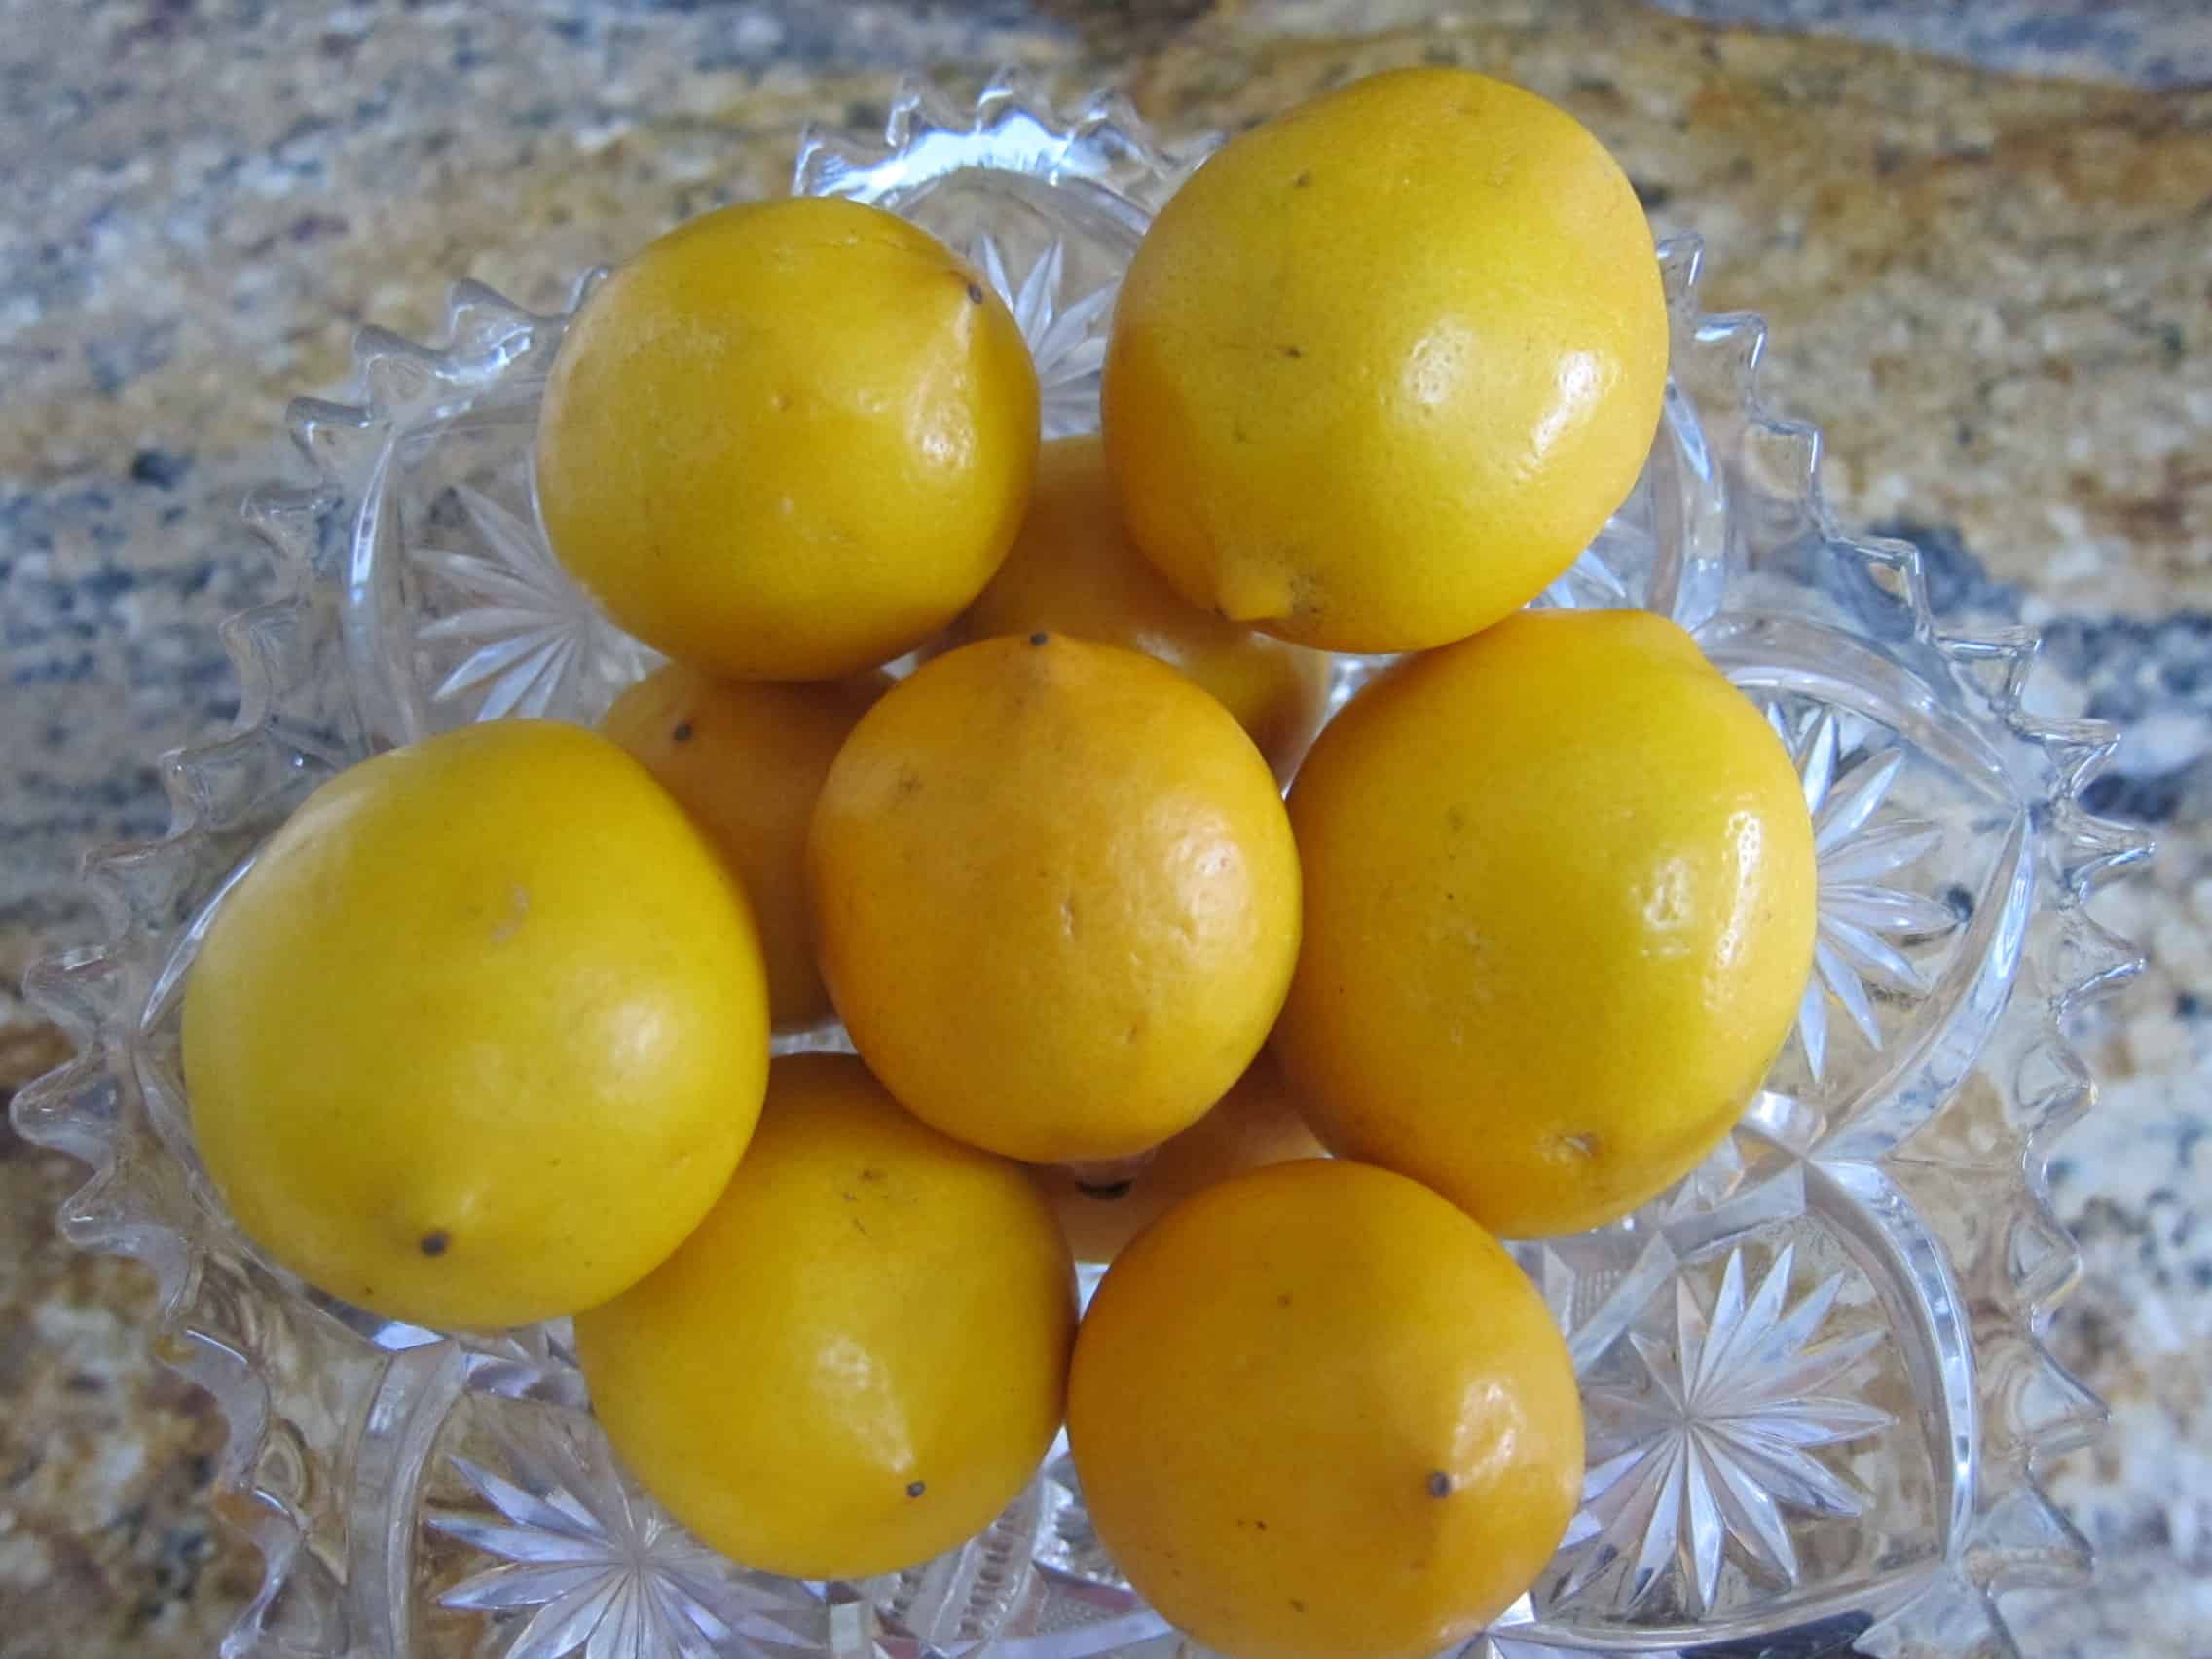  One of my favorite recipes using Meyer lemons is lemon curd.